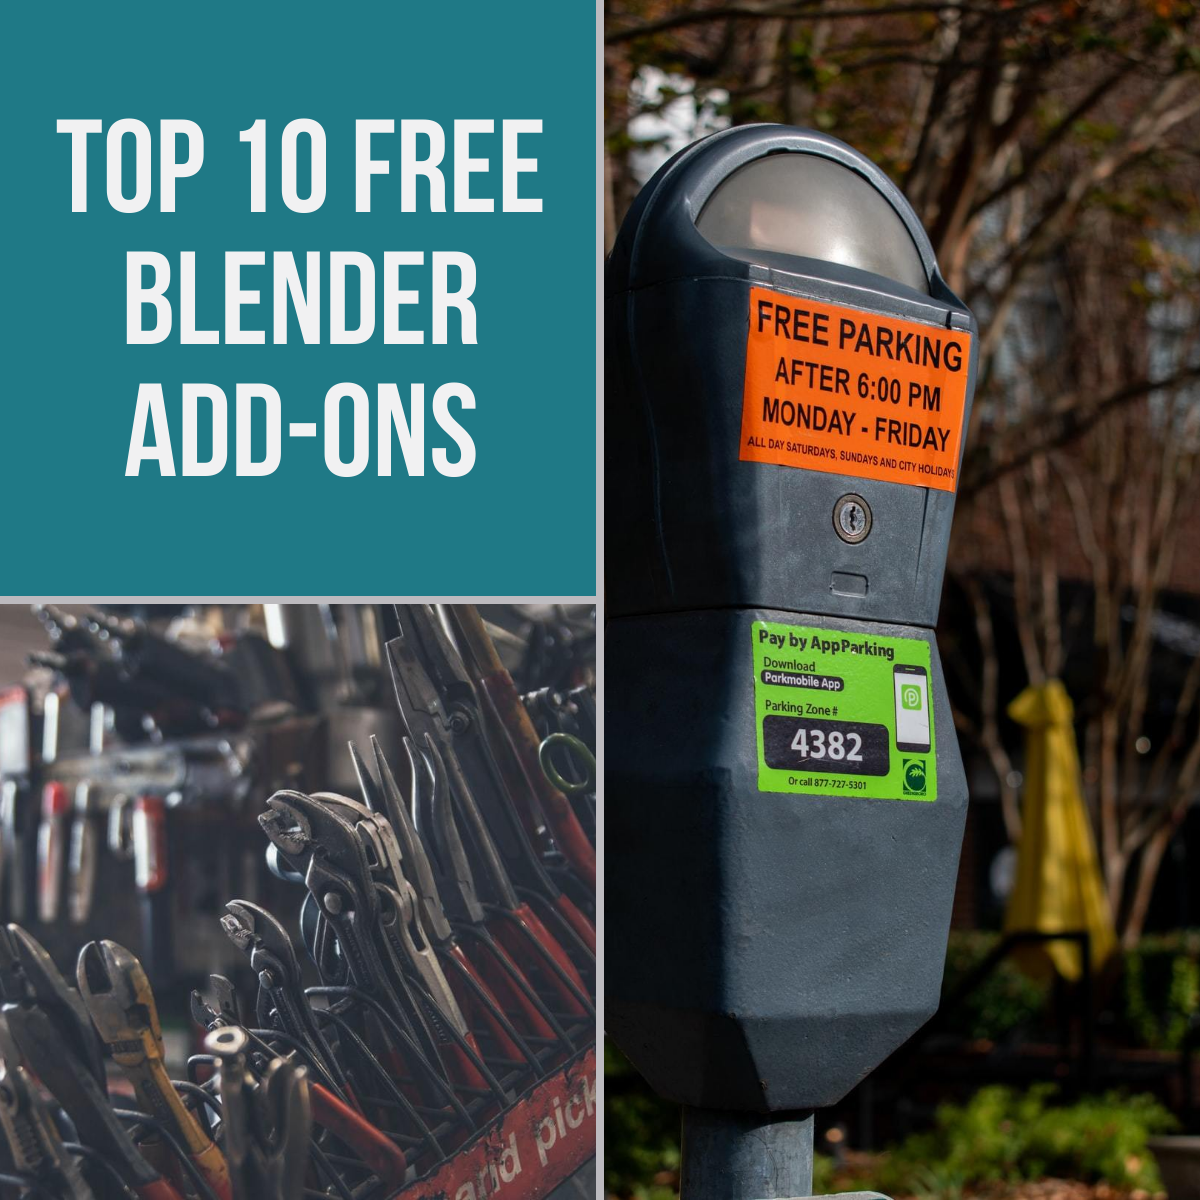 Top 10 Free Blender add-ons 